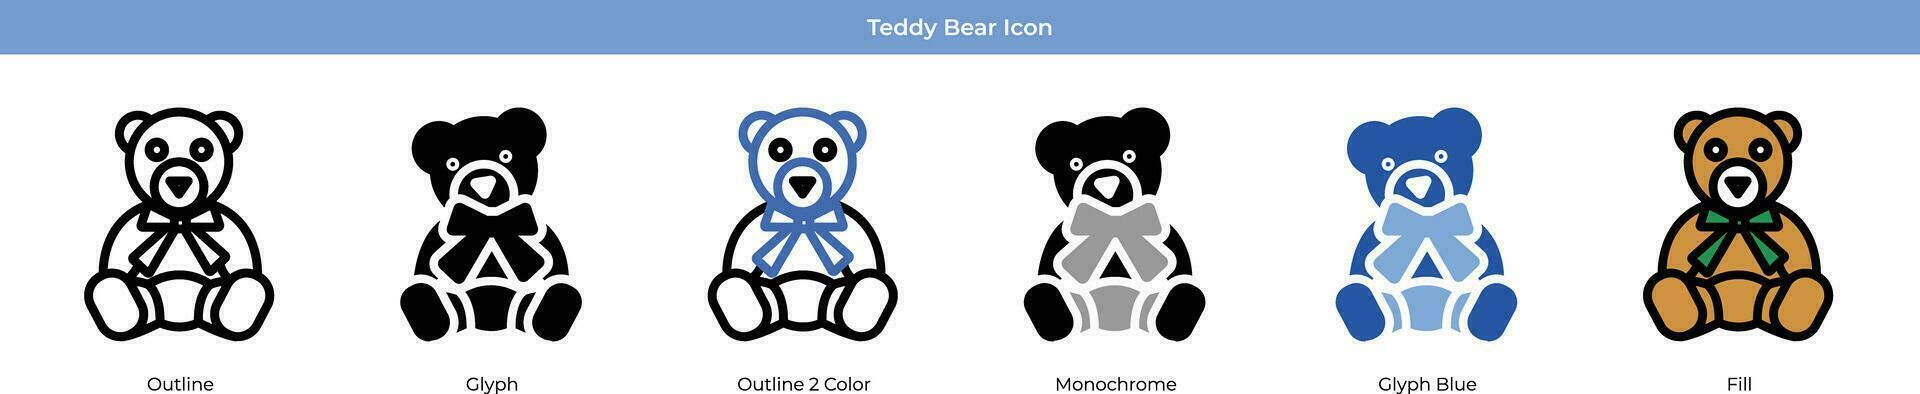 Teddy Bear Icon vector